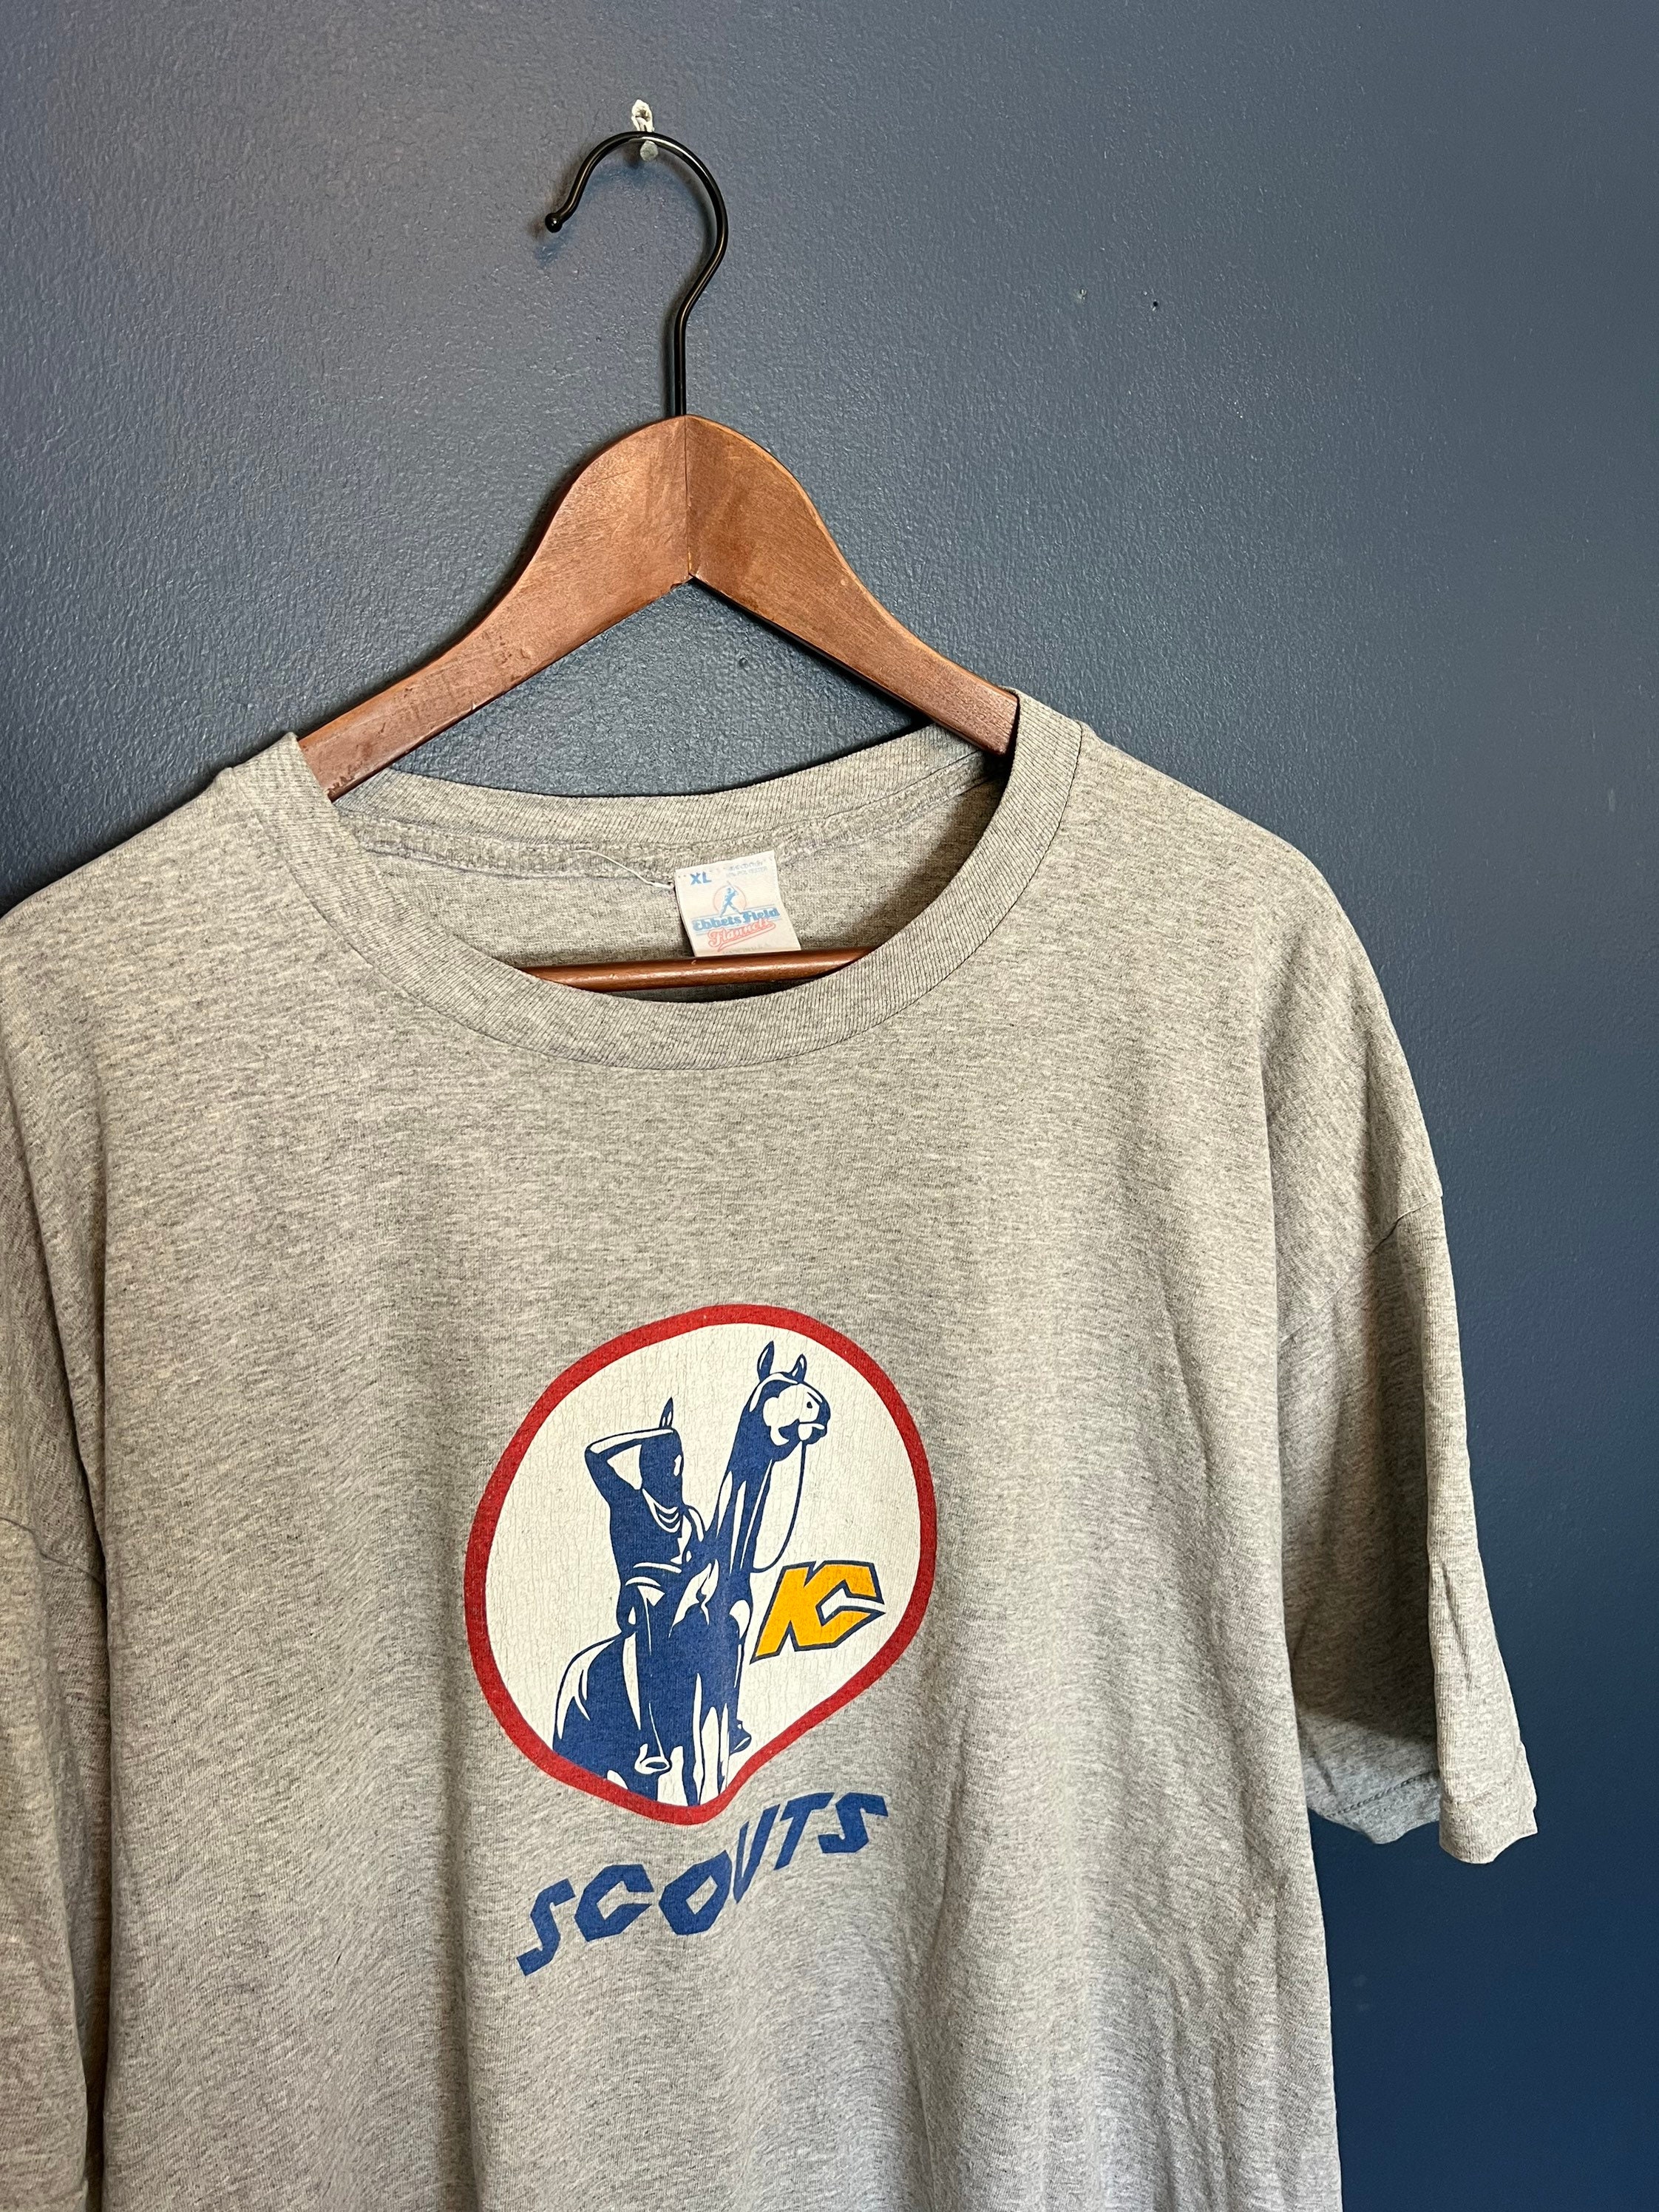 Kansas City Scouts Jersey NHL Fan Apparel & Souvenirs for sale